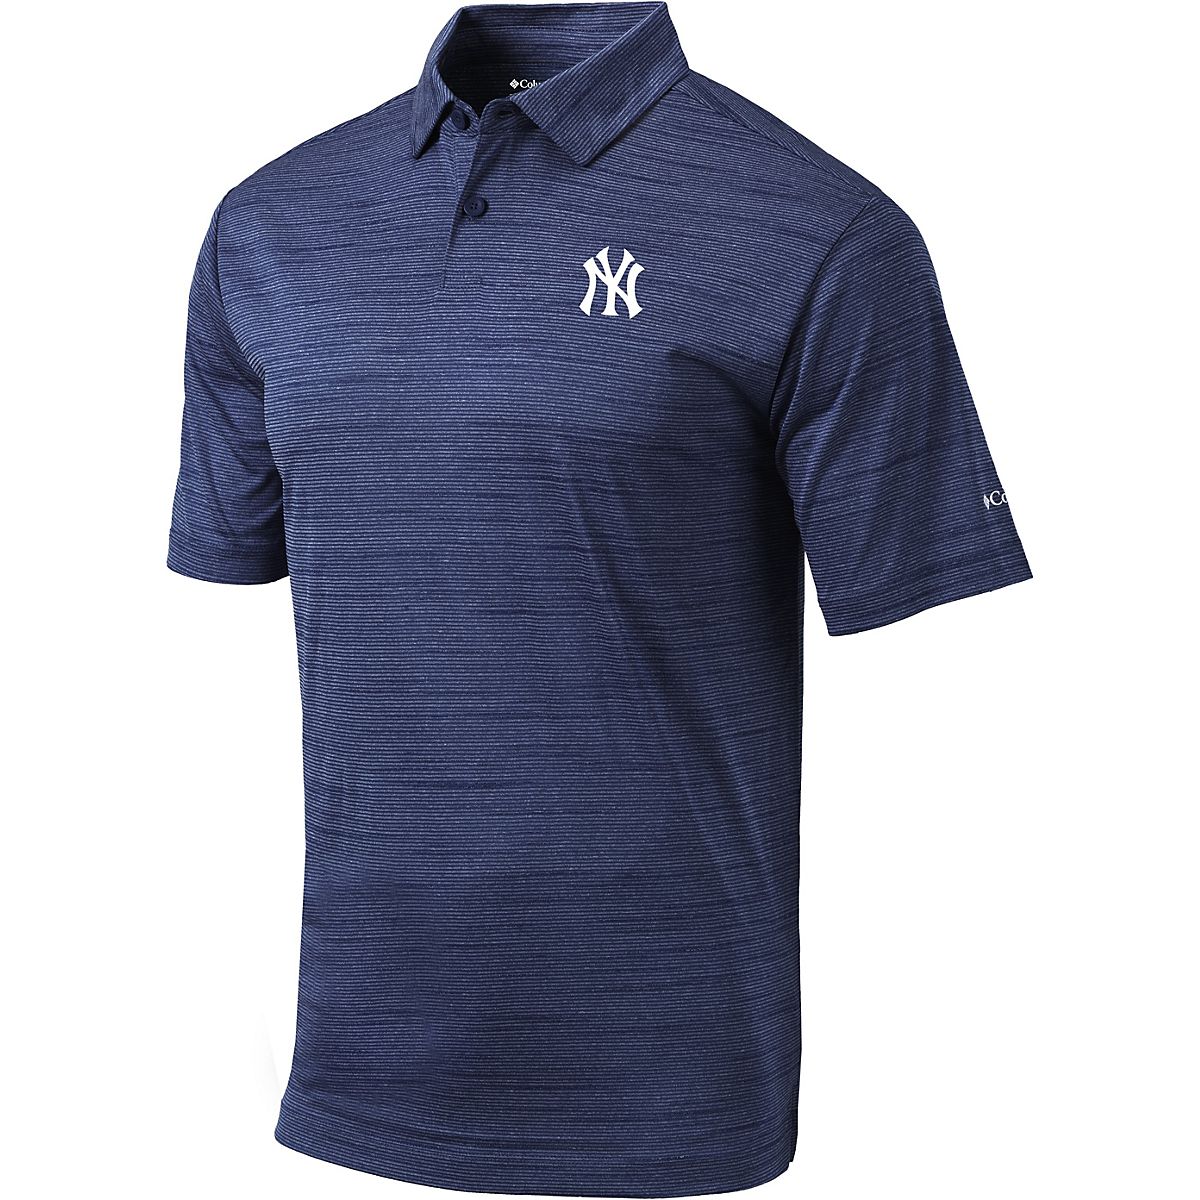 Columbia Sportswear Men's New York Yankees Set Polo Shirt